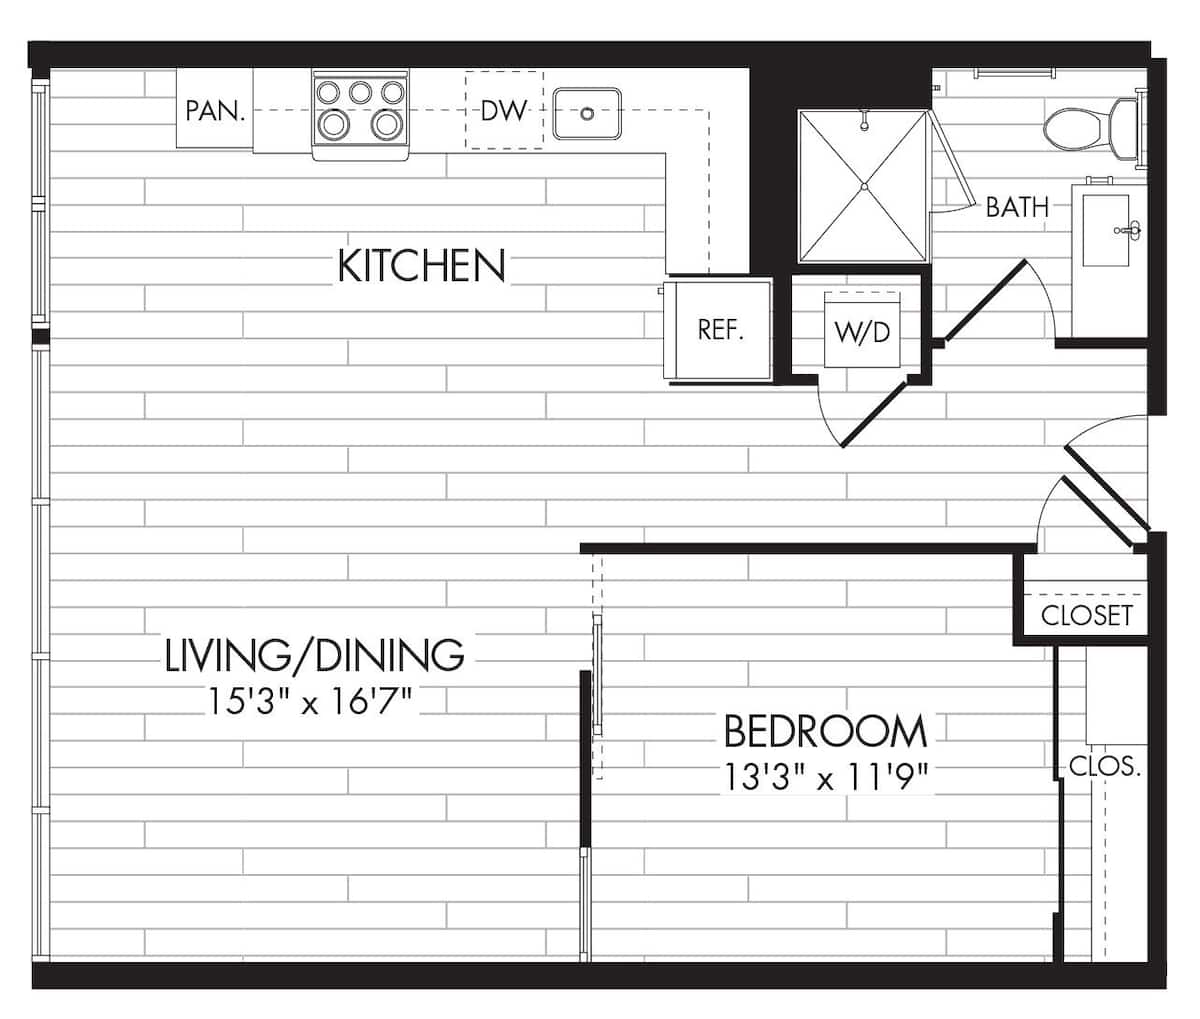 Floorplan diagram for 1K, showing 1 bedroom